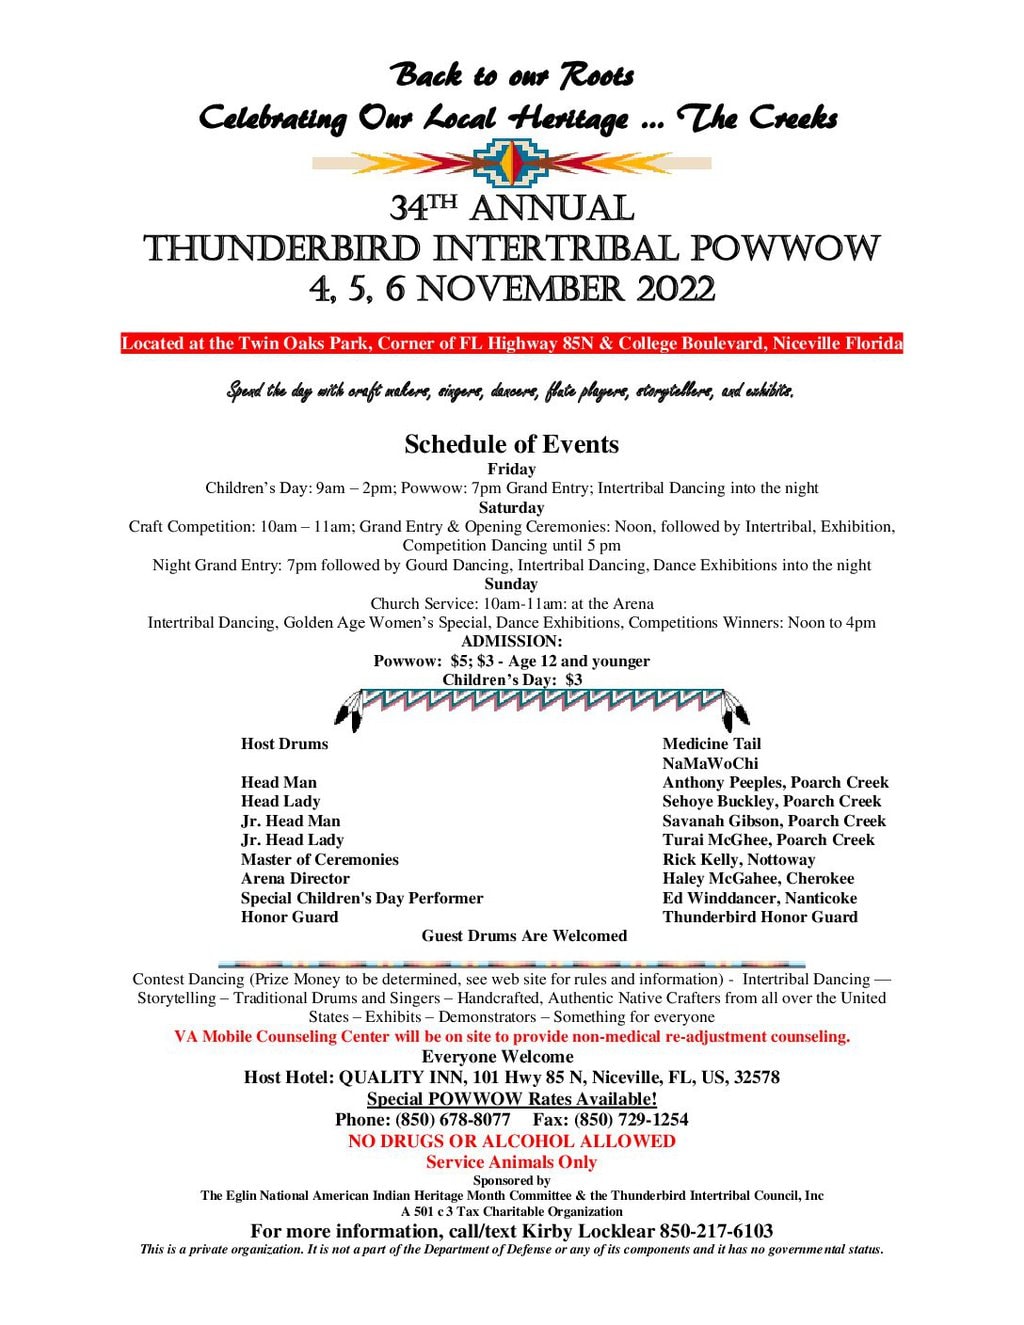 34th Annual Thunderbird Intertribal Pow Wow 2022